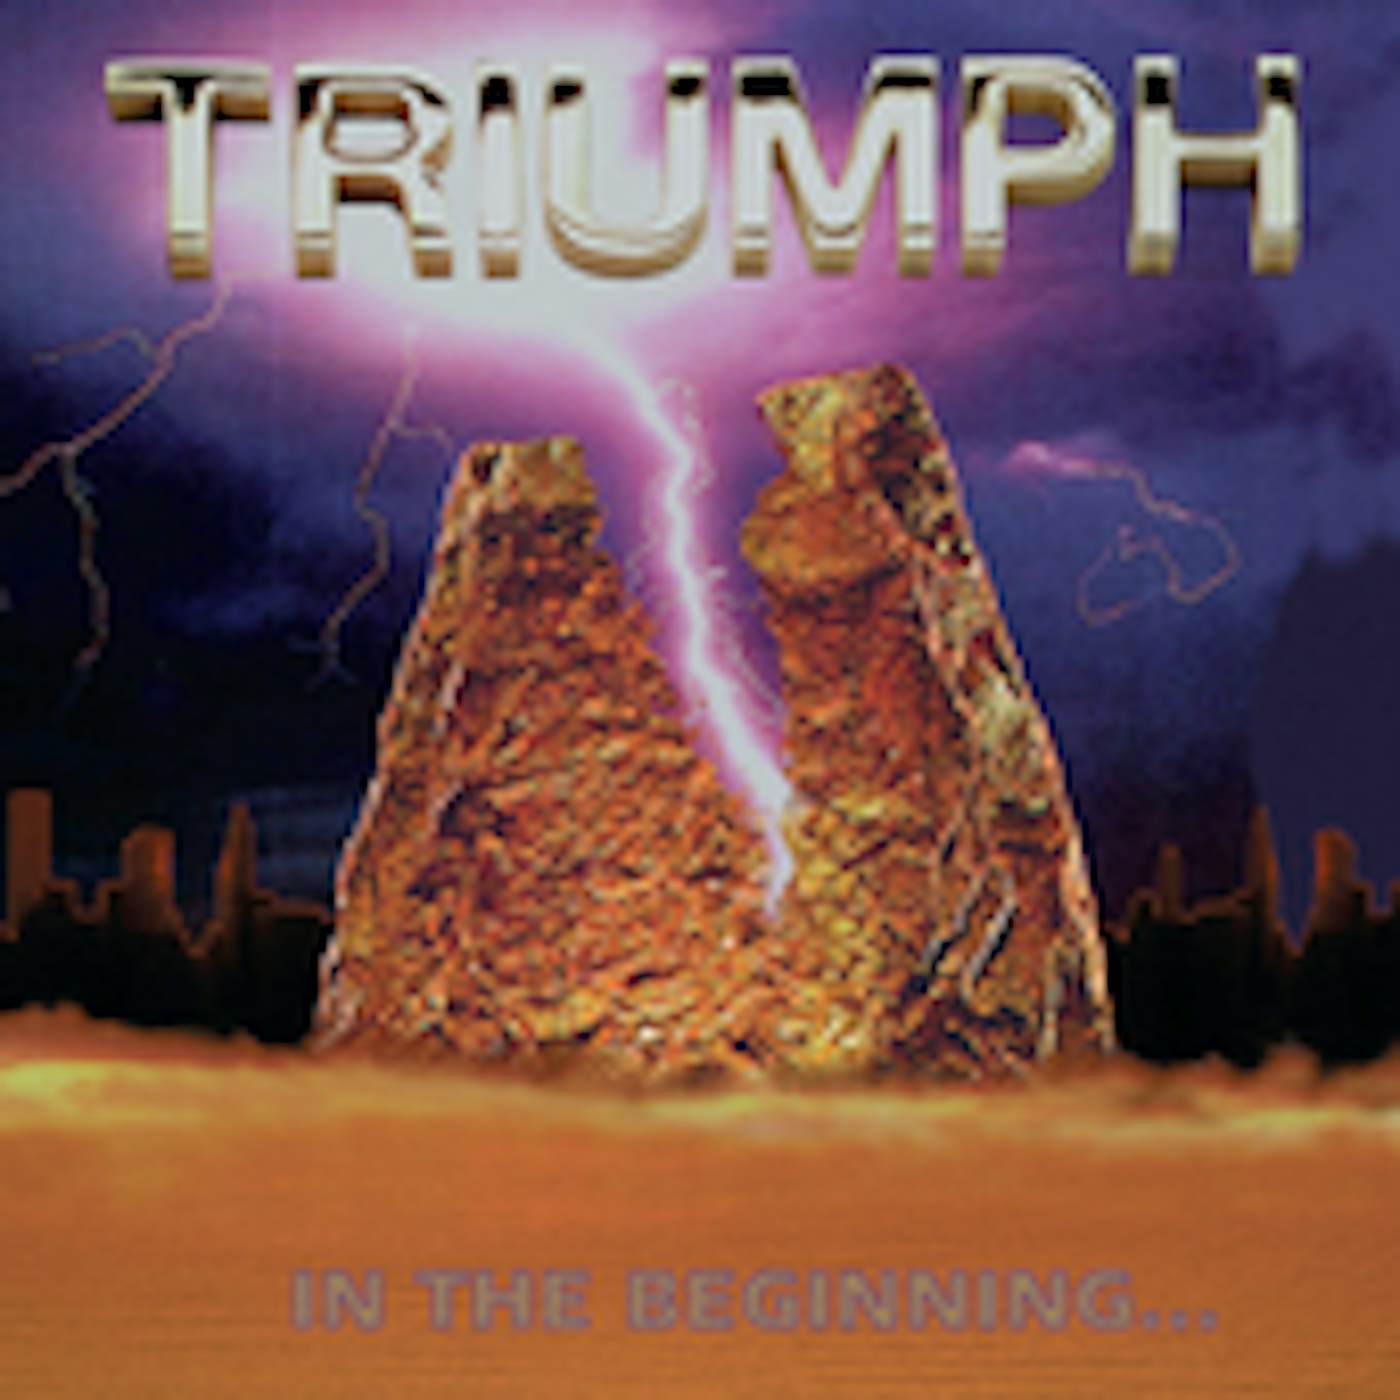 Triumph IN THE BEGINNING CD